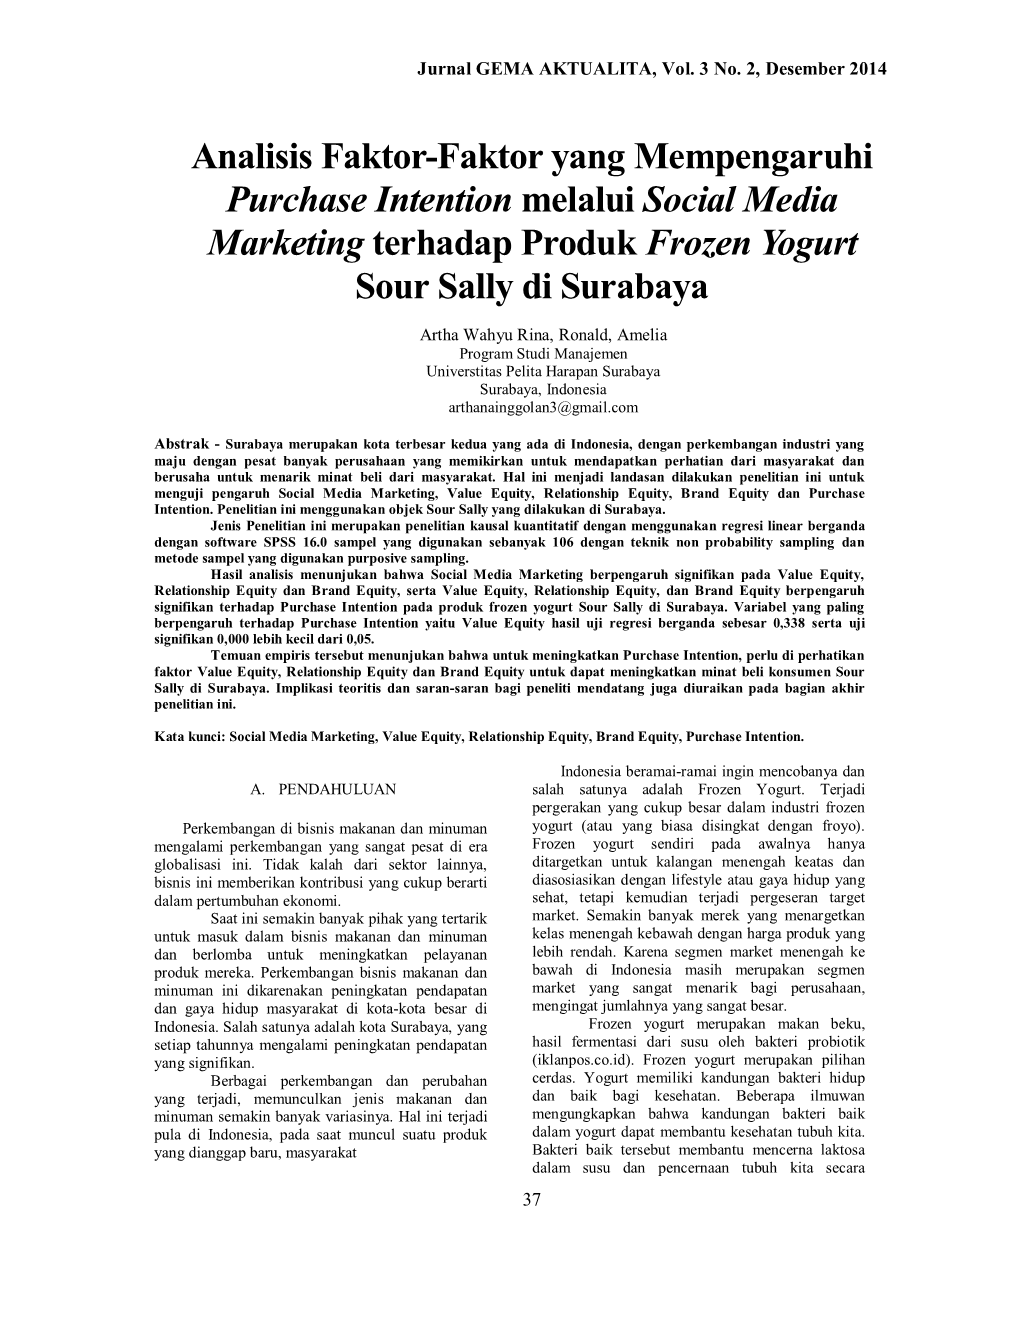 Analisis Faktor-Faktor Yang Mempengaruhi Purchase Intention Melalui Social Media Marketing Terhadap Produk Frozen Yogurt Sour Sally Di Surabaya